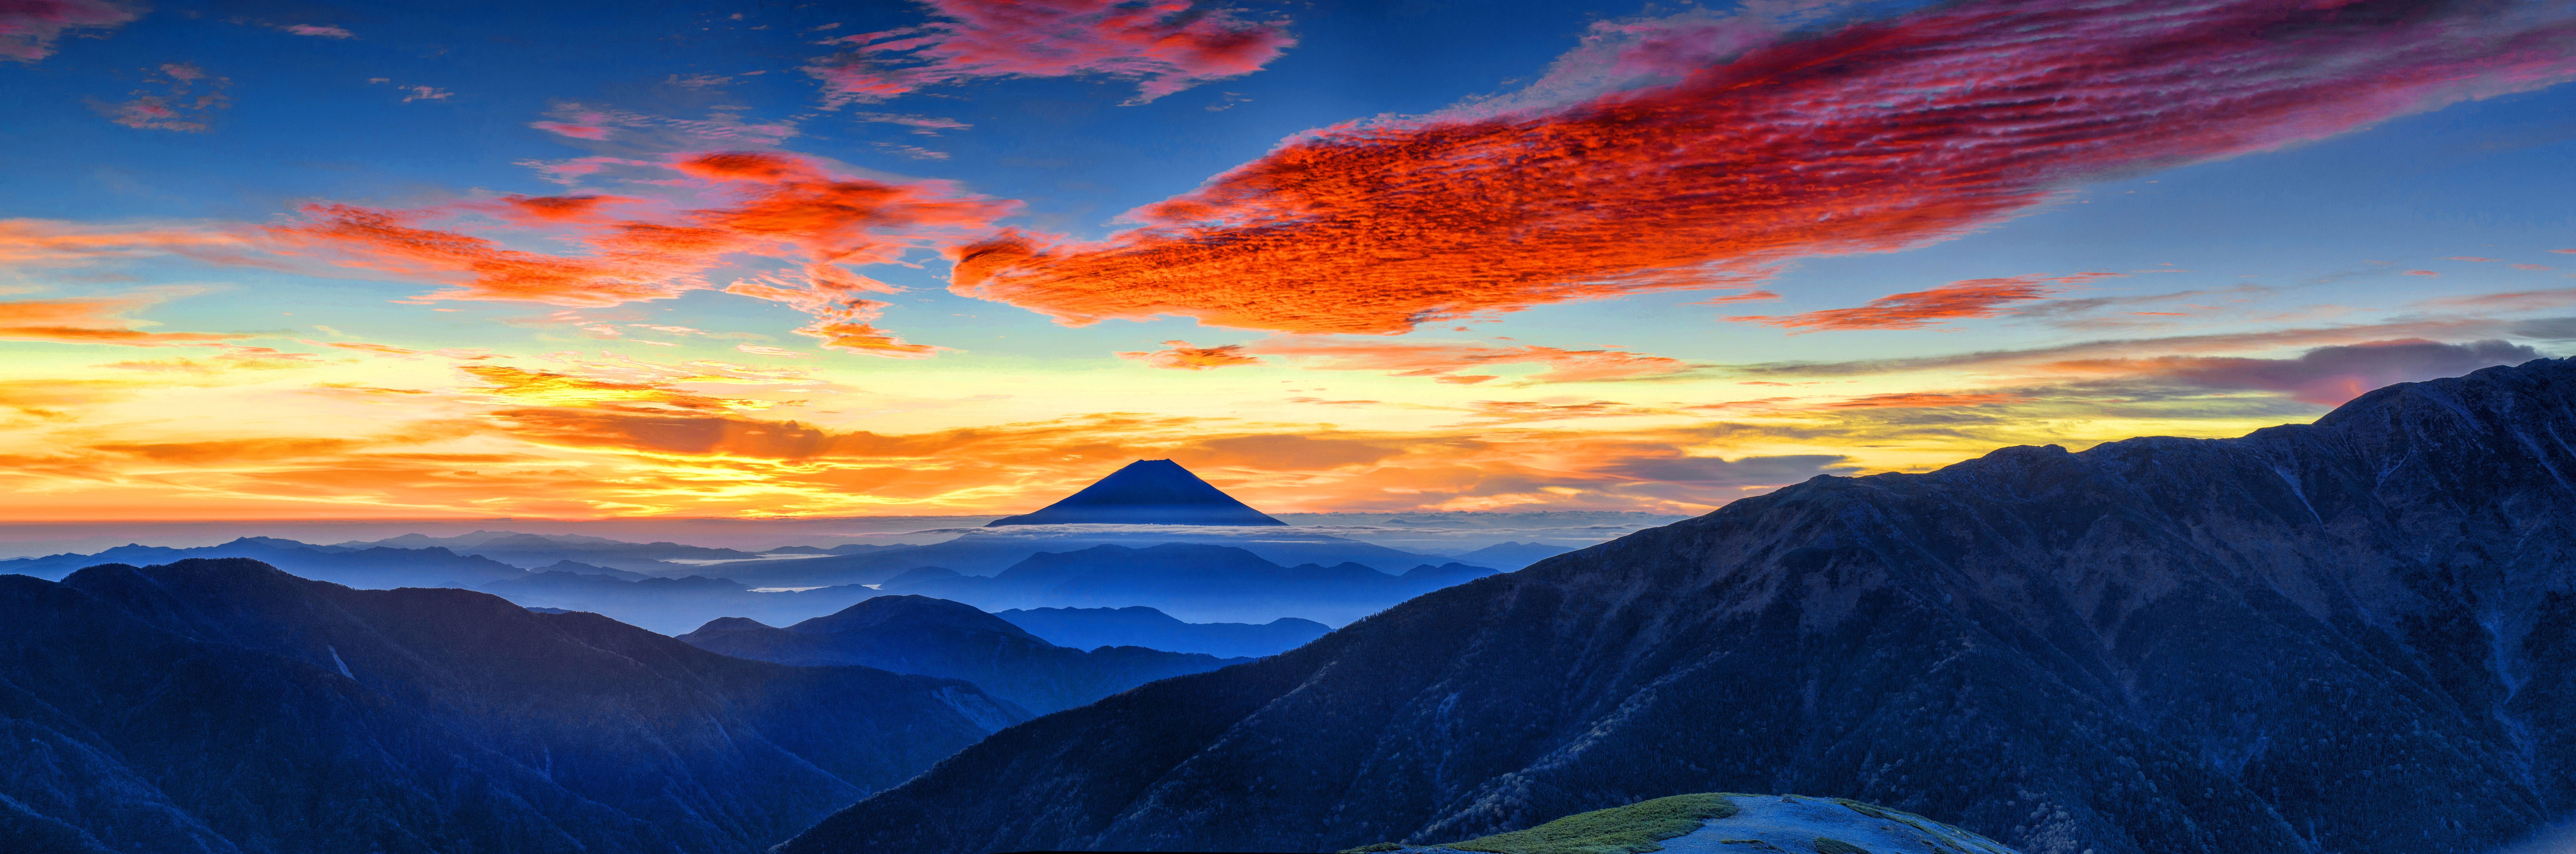 Mount Fuji Panaromic 8k 8k HD 4k Wallpaper, Image, Background, Photo and Picture